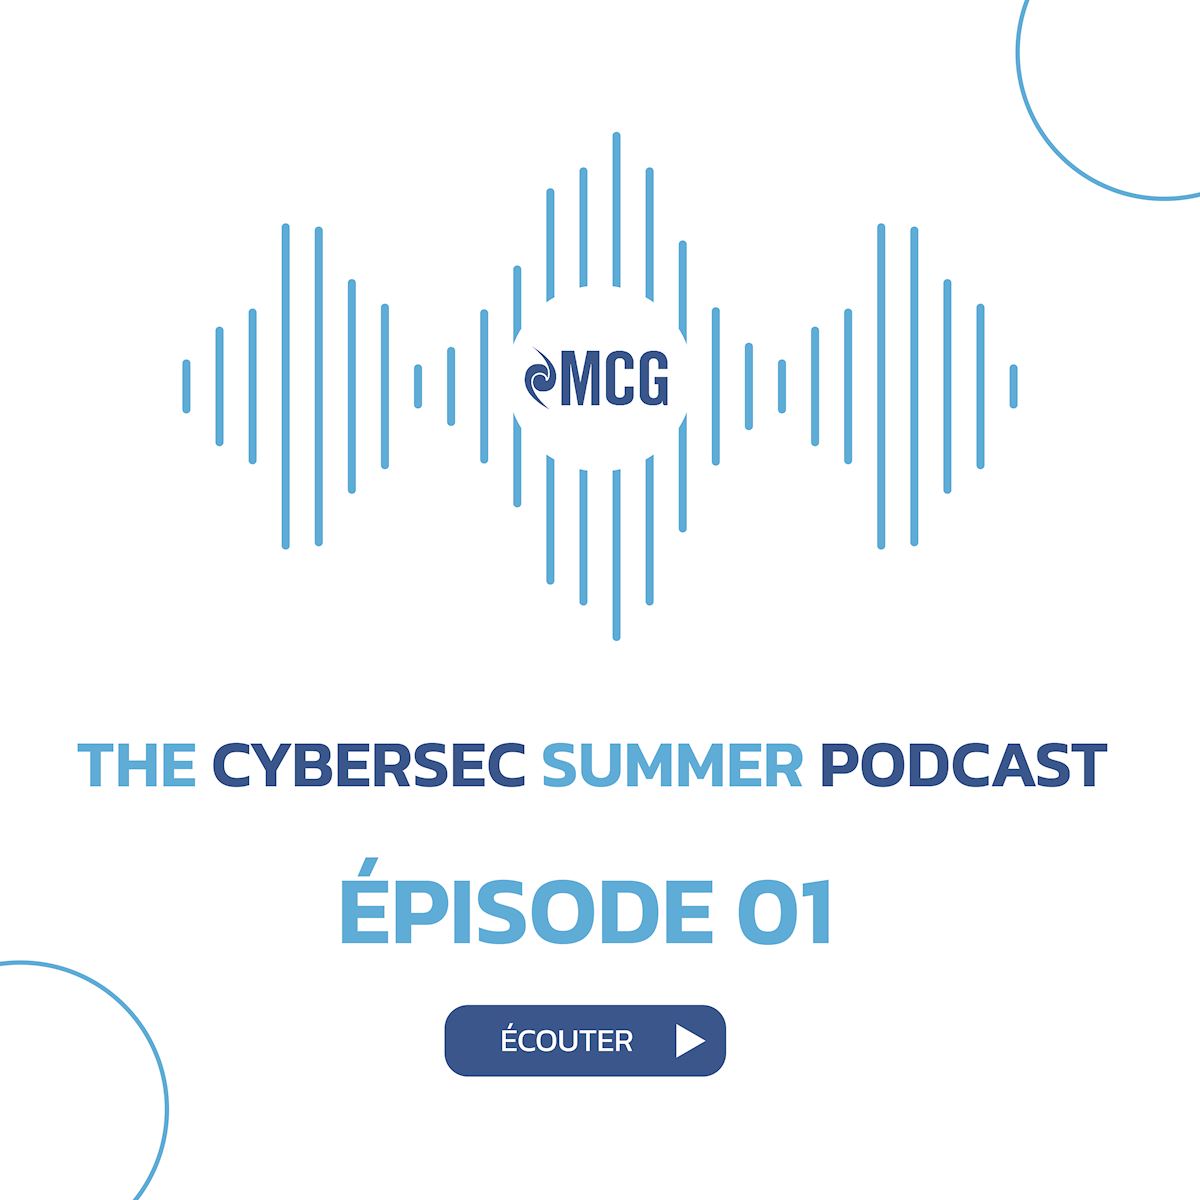 Le Cybersec Summer Podcast de MCG - Ep. 01